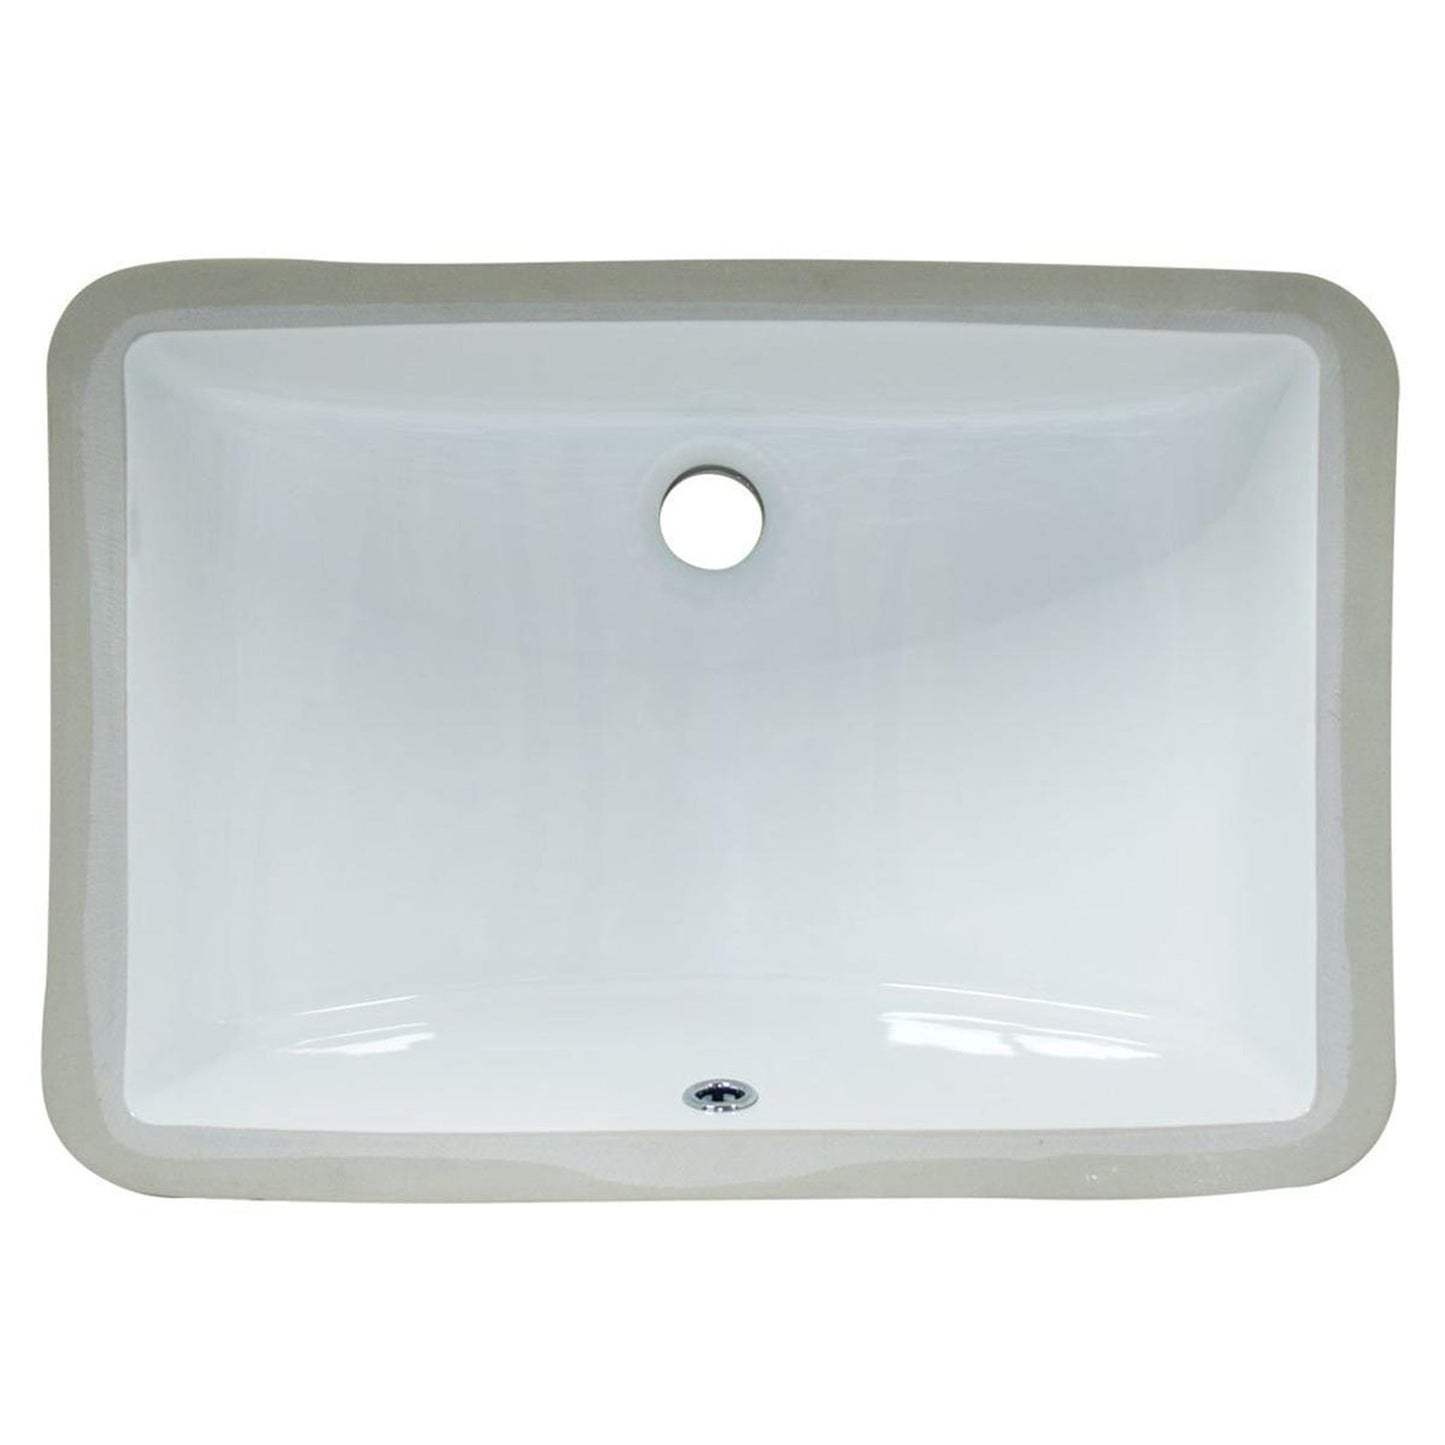 Pelican Int'l Pearl Series PL-3044 18 1/4" x 12" Extra Deep White Porcelain Undermount Bathroom Sink